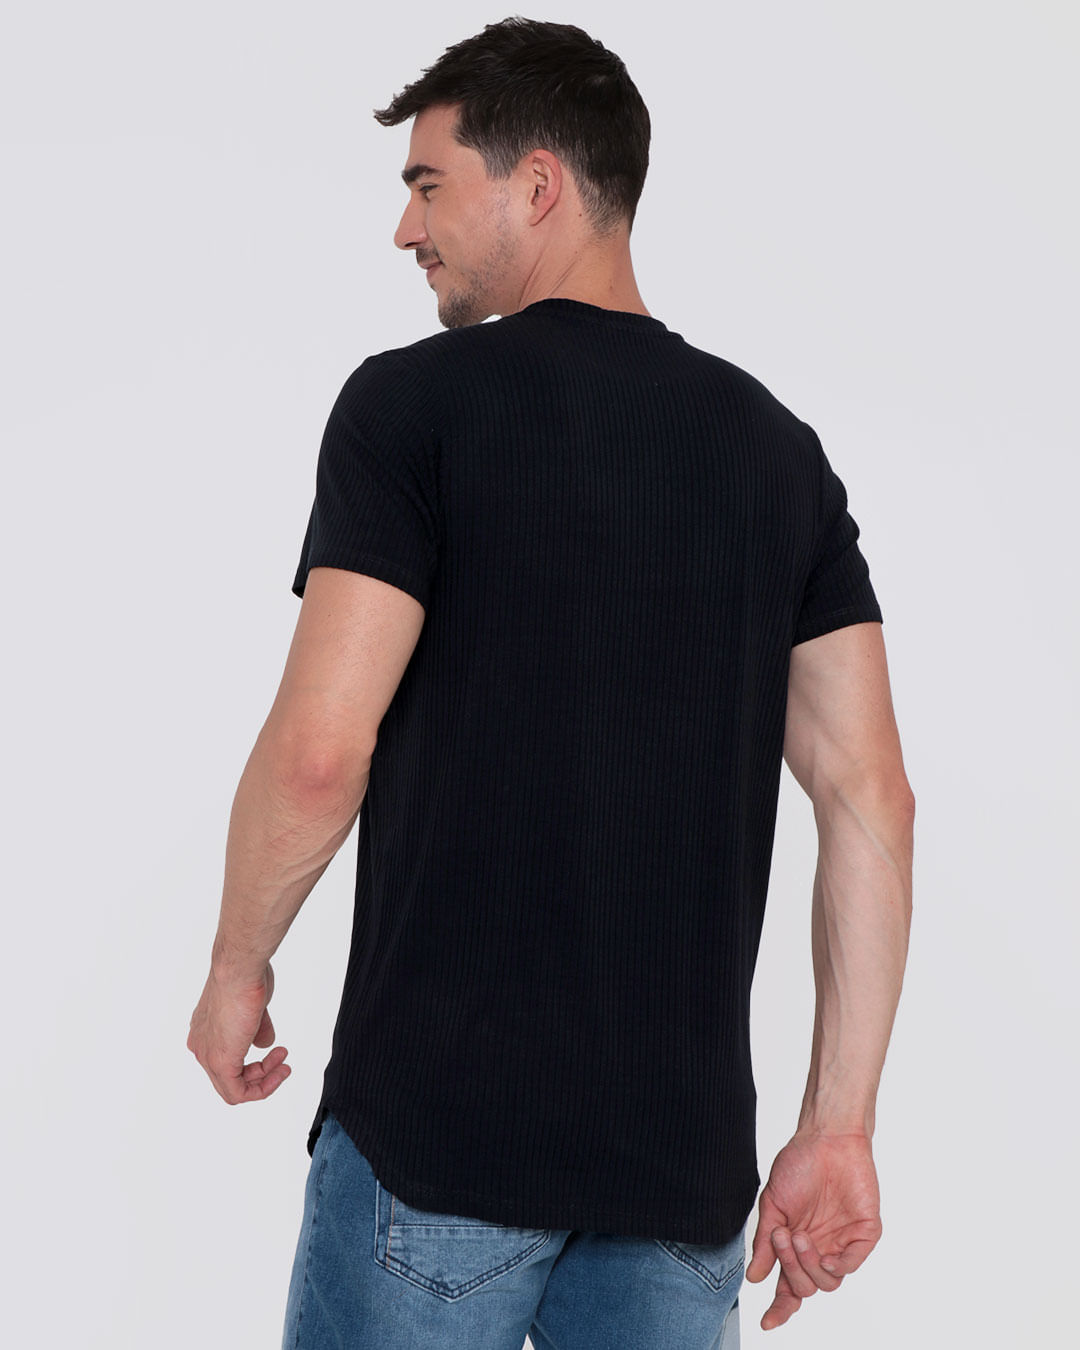 Camiseta-Masculina-Long-Line-Canelada-Preta